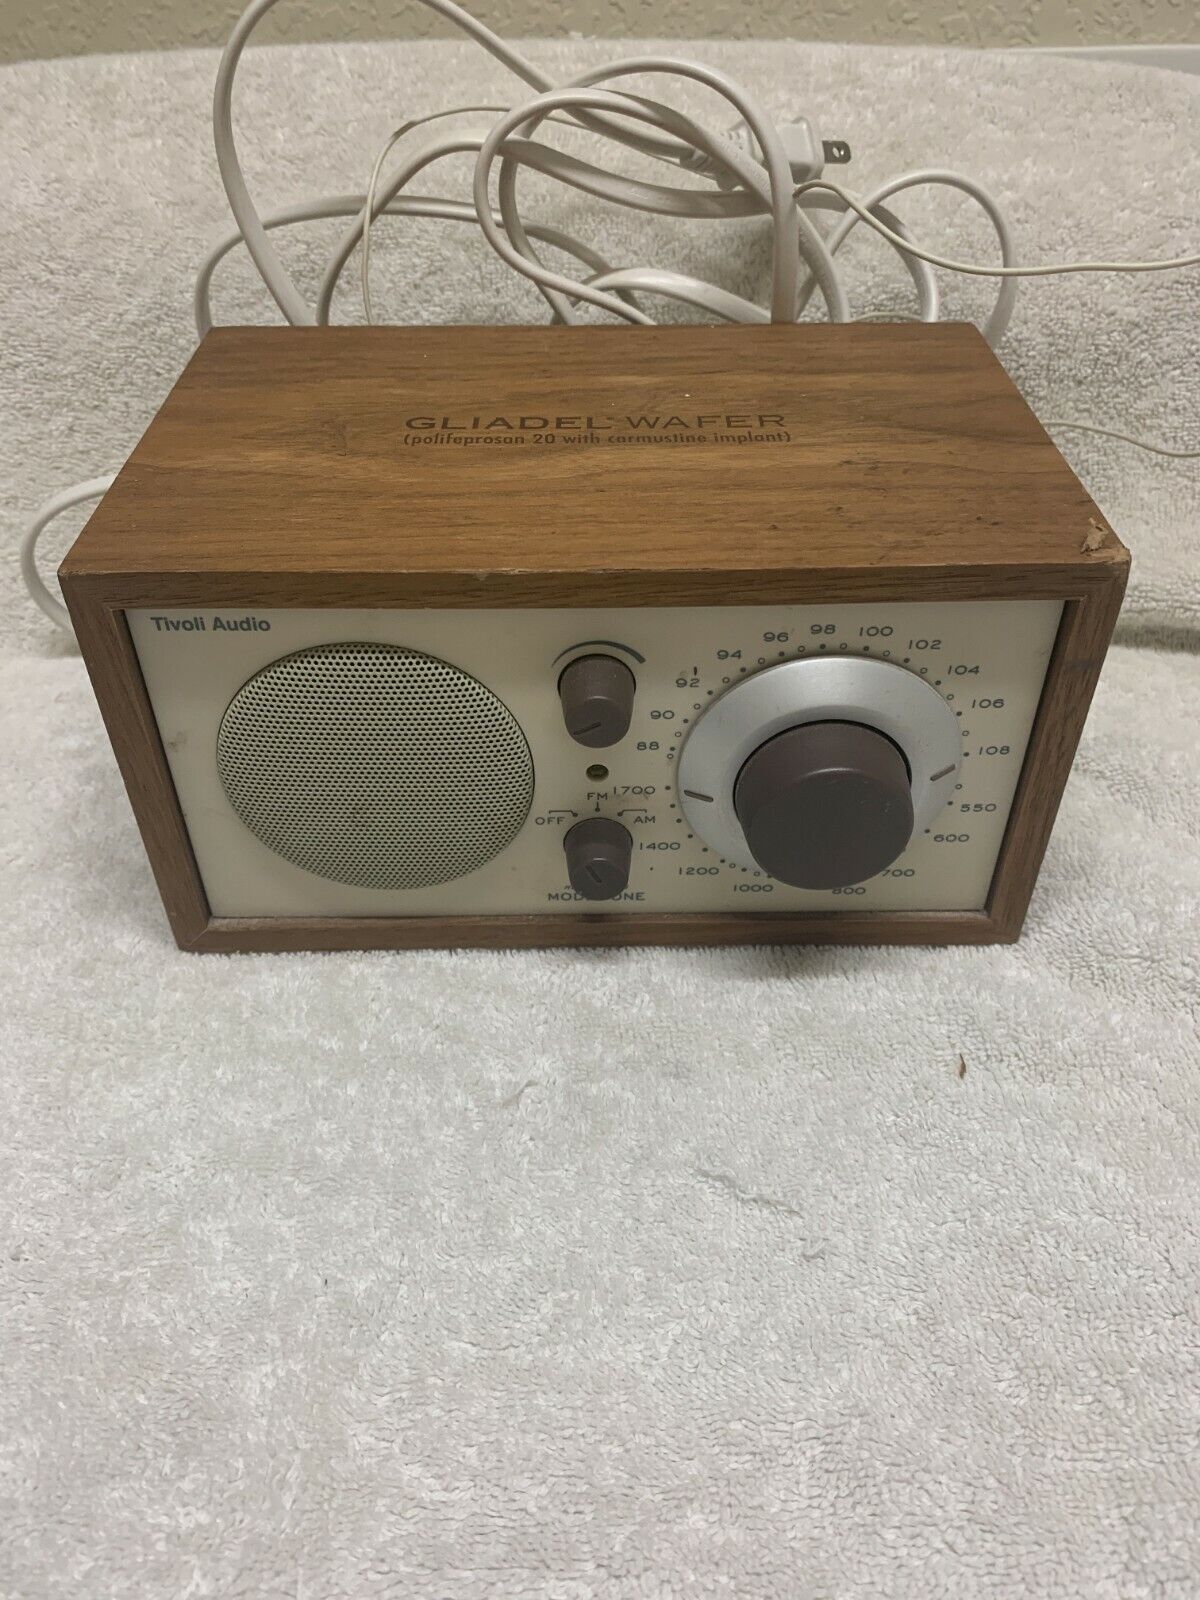 Tivoli Audio Model One AM/FM Table Radio by Henry Kloss